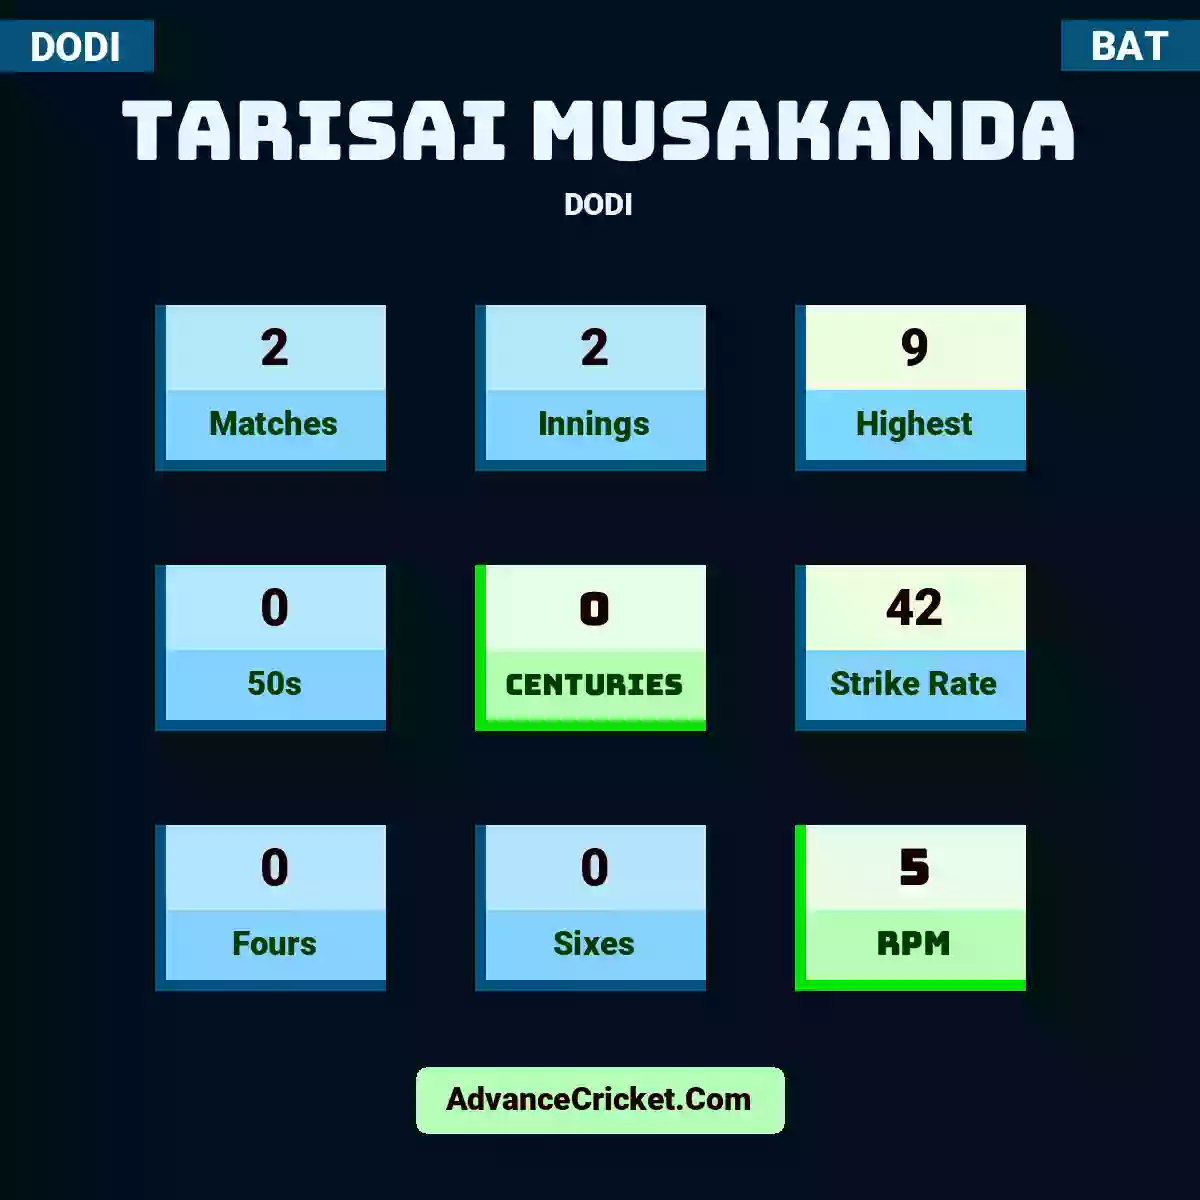 Tarisai Musakanda DODI , Tarisai Musakanda played 2 matches, scored 9 runs as highest, 0 half-centuries, and 0 centuries, with a strike rate of 42. T.Musakanda hit 0 fours and 0 sixes, with an RPM of 5.